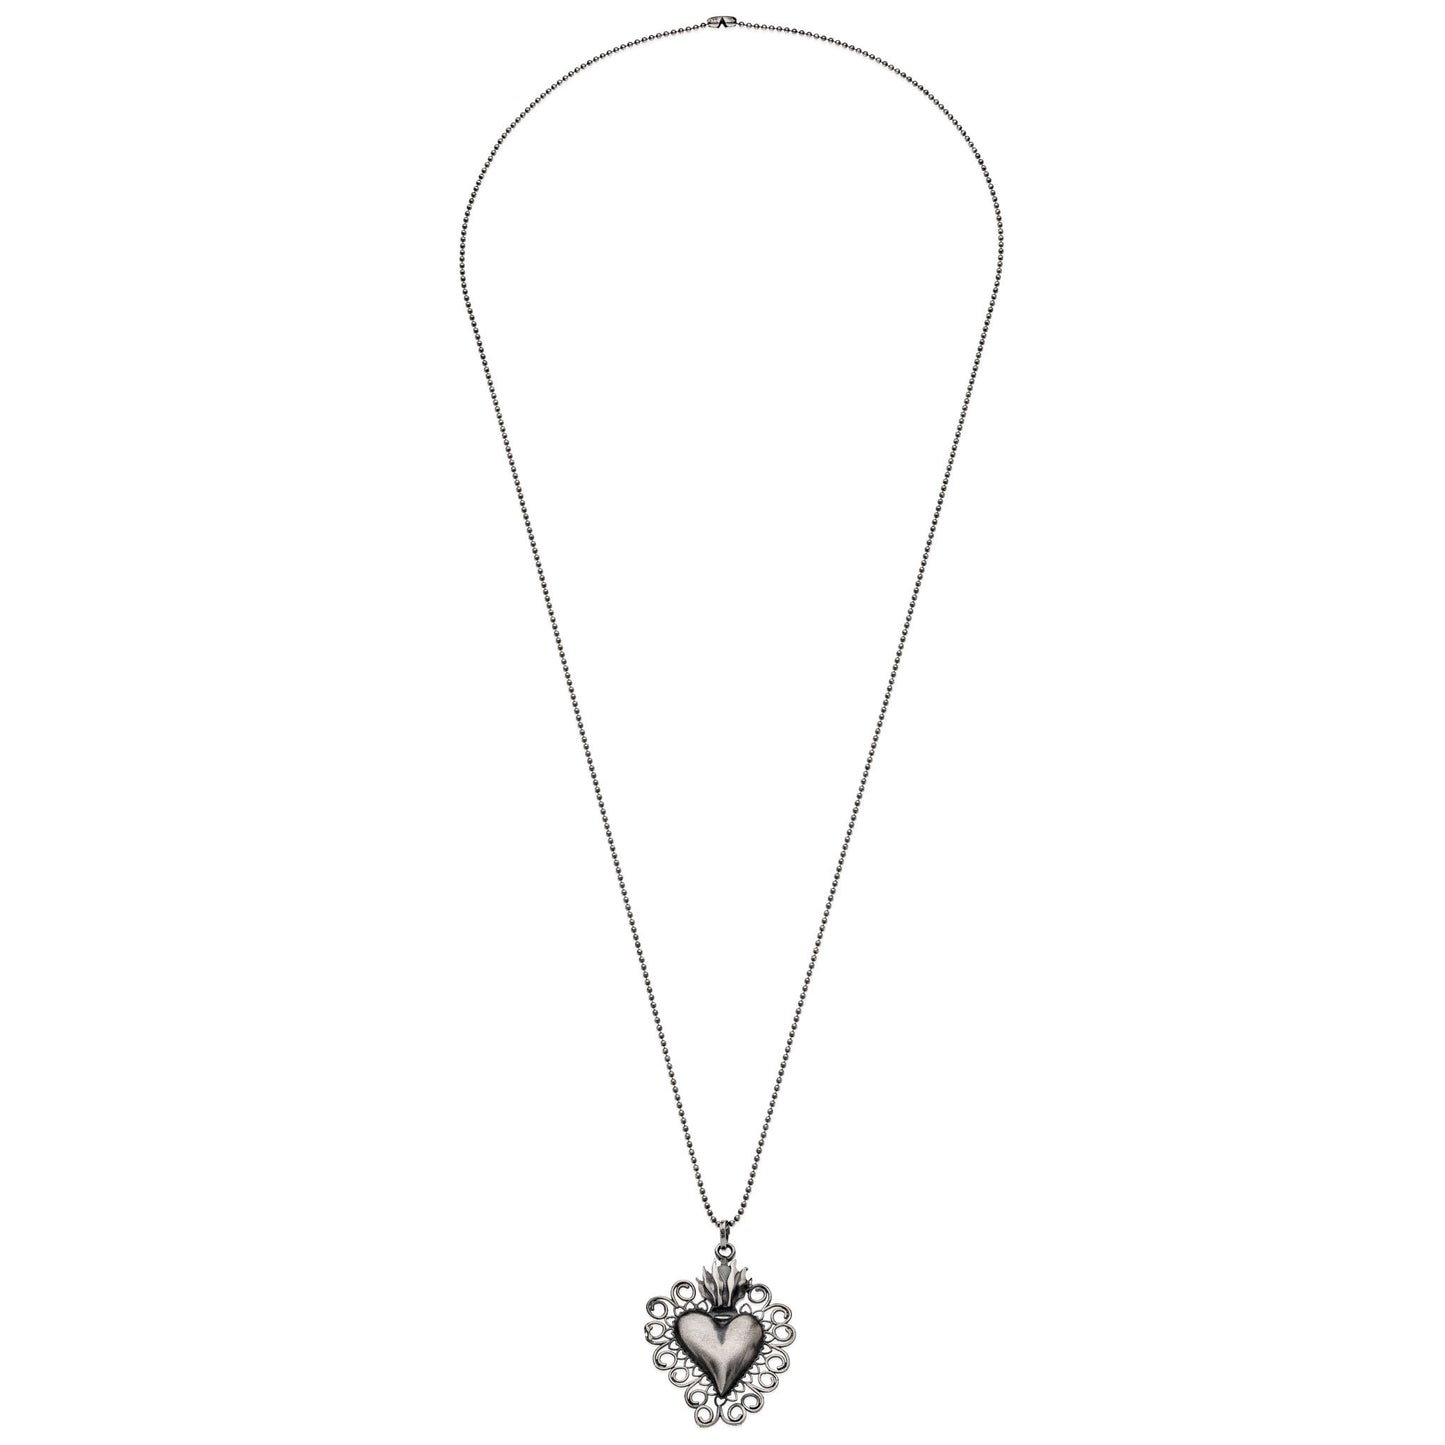 CORAZON Sacred Heart 925 sterling silver vintage necklace pendant #MS024CL - MARIA SALVADOR